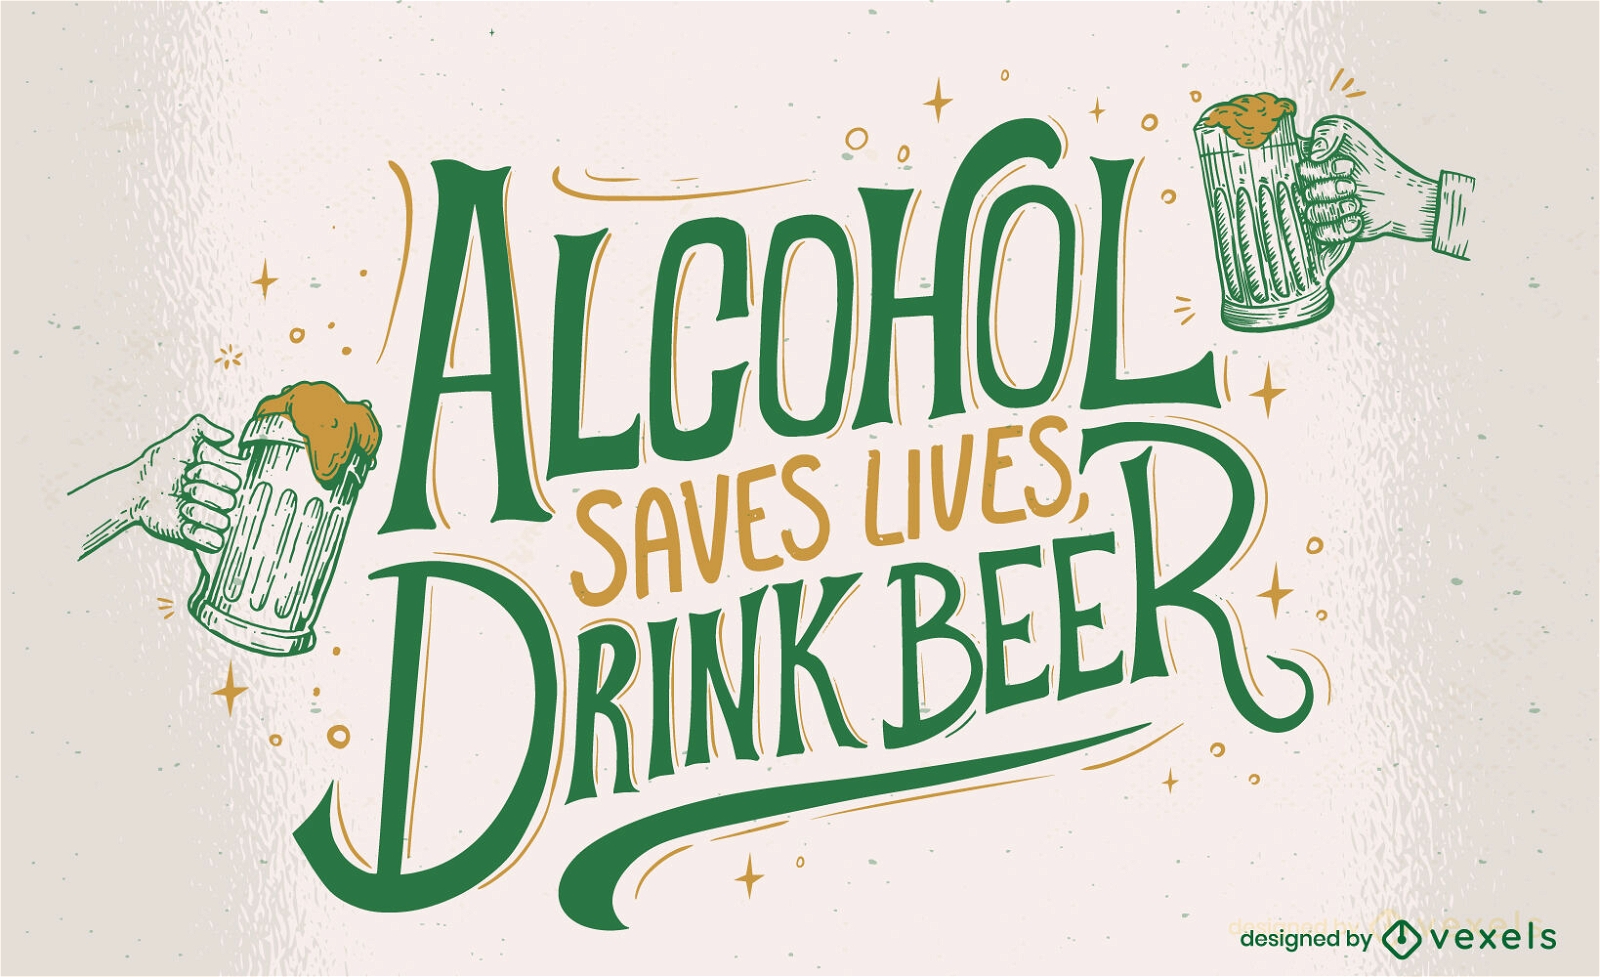 El alcohol salva vidas ilustraci?n